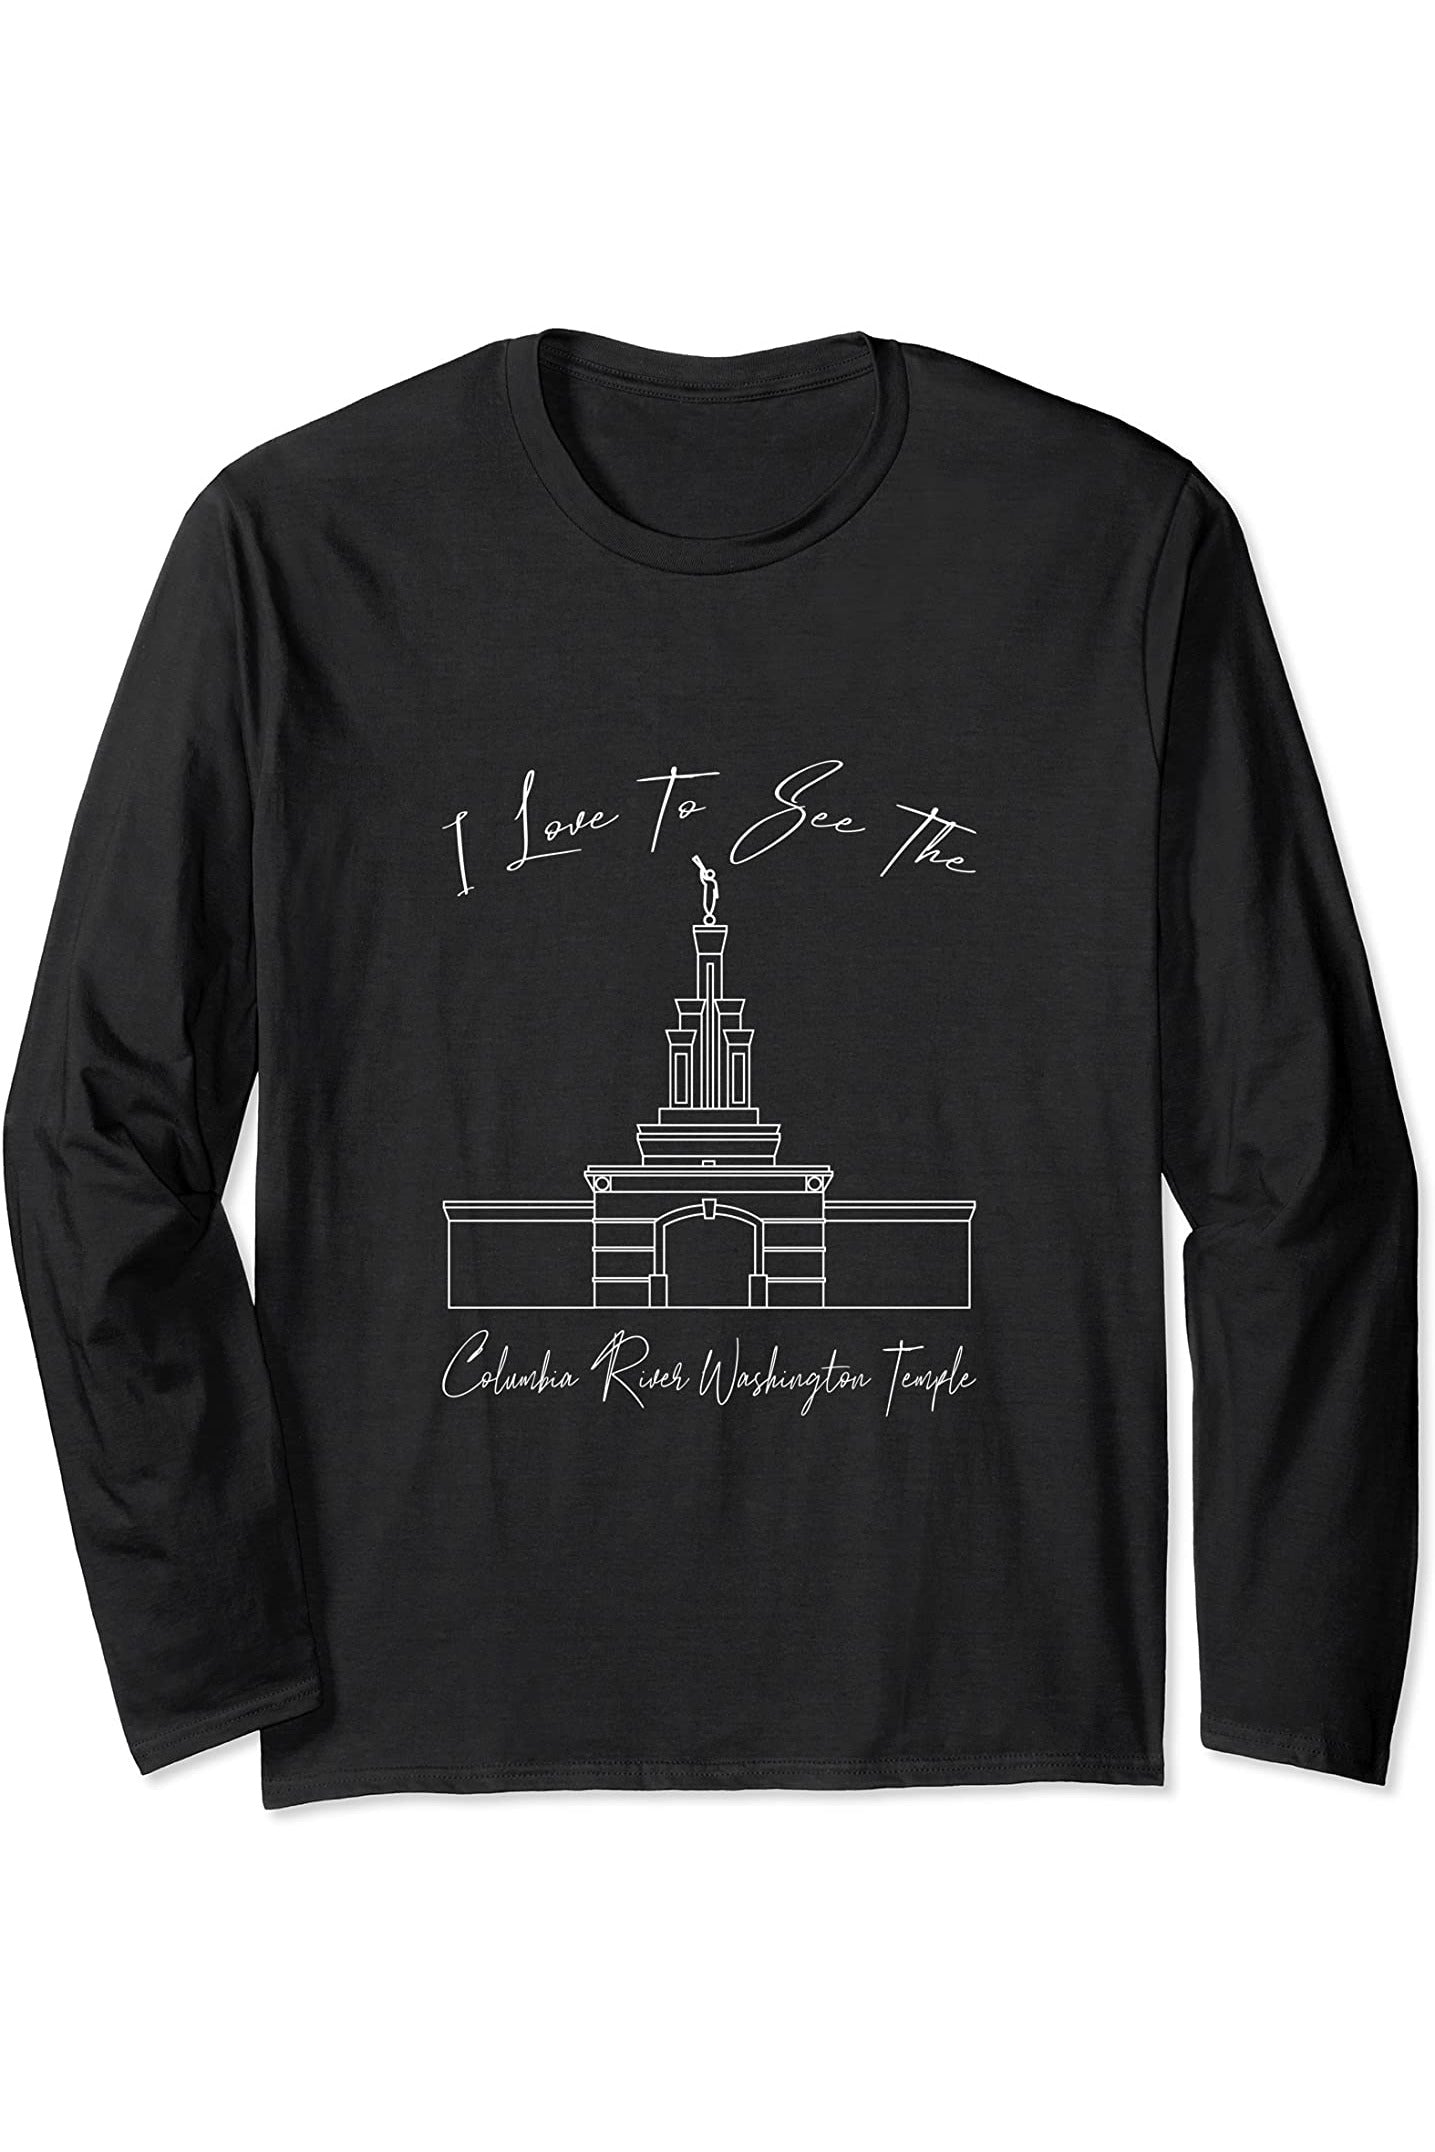 Columbia River Washington Temple Long Sleeve T-Shirt - Calligraphy Style (English) US